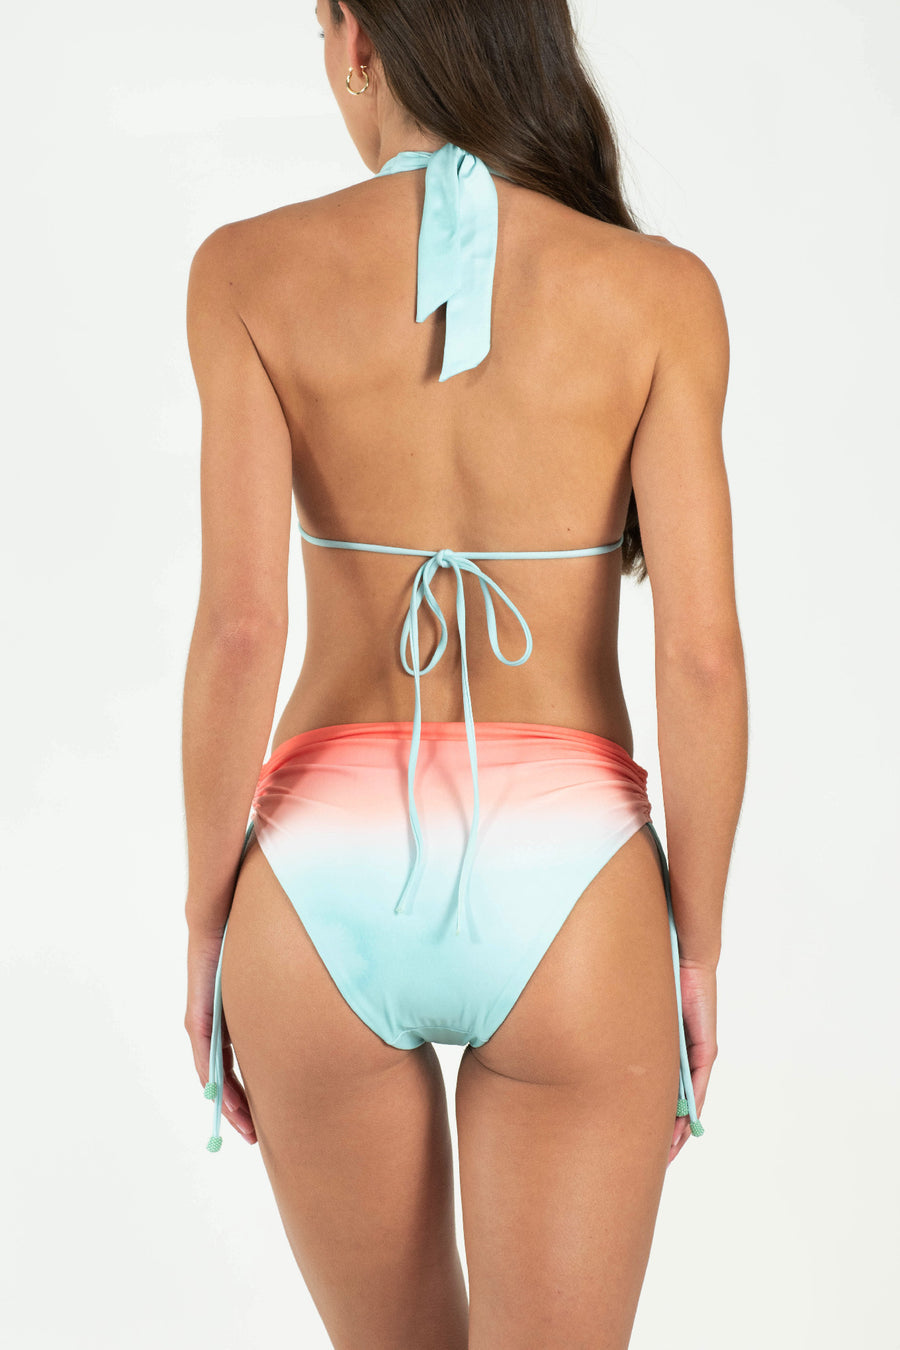 Oasis Coral high waisted Bikini BOTTOM - shopsigal